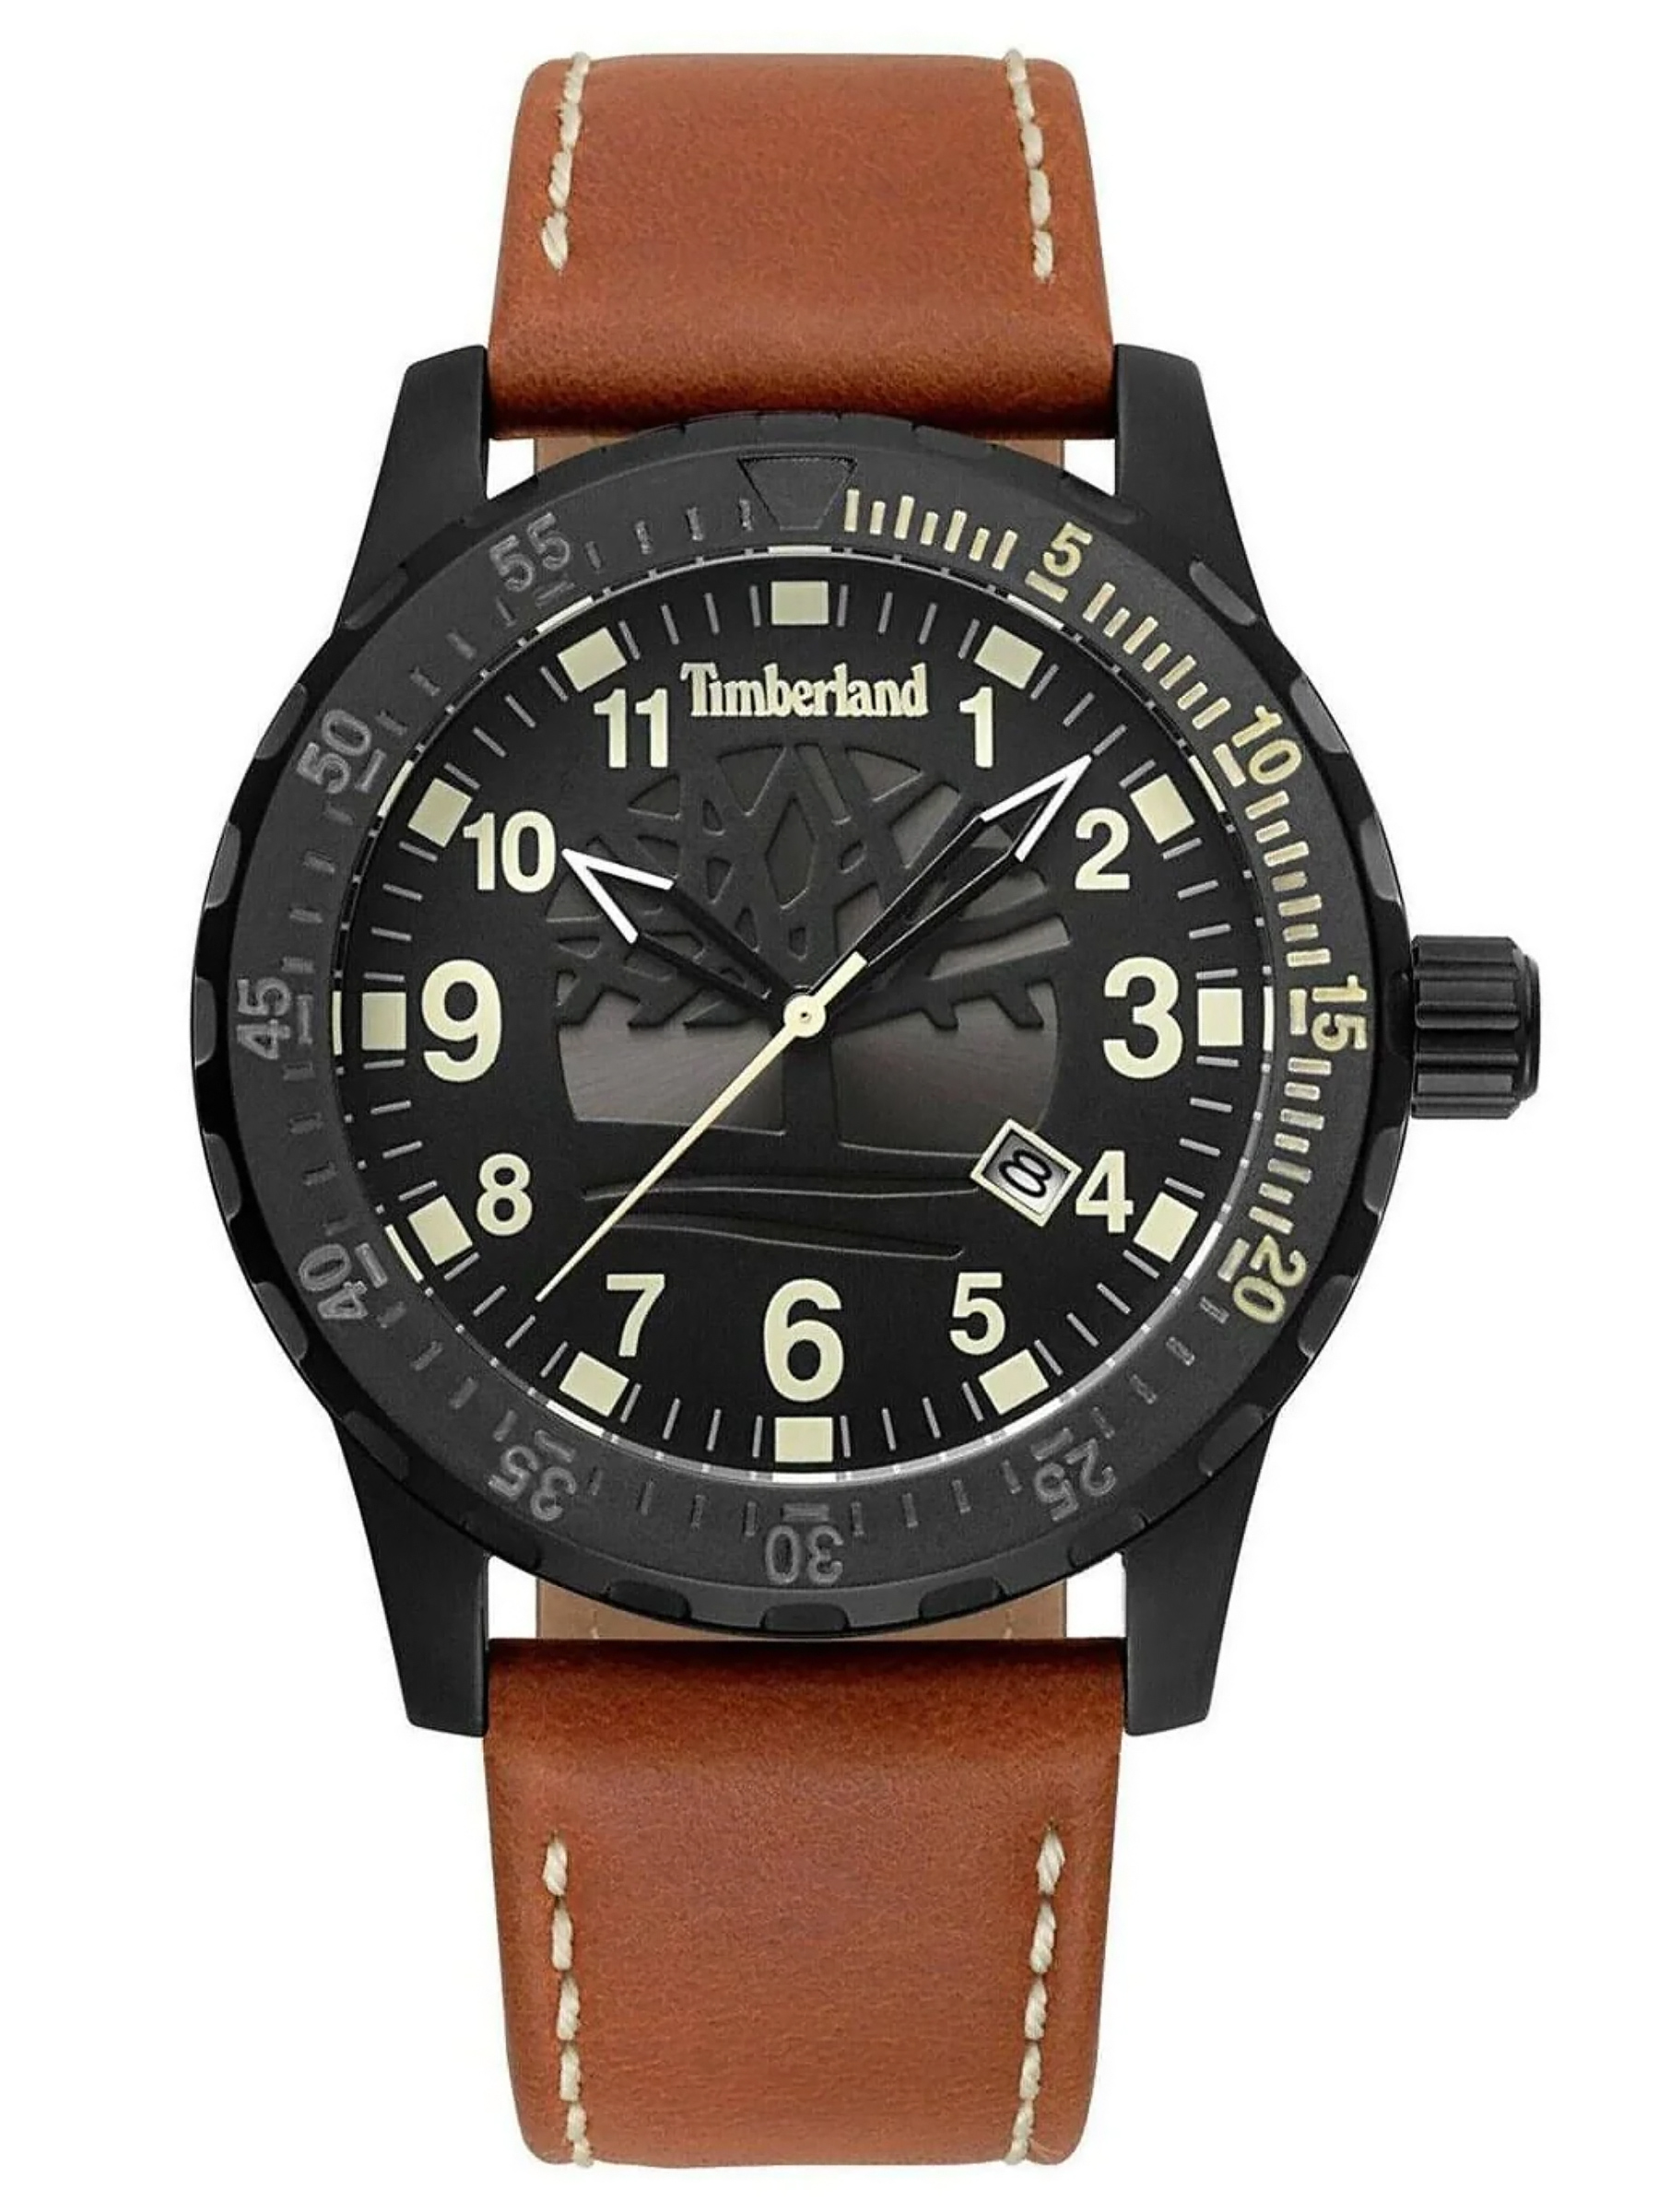 E-shop Pánske hodinky Timberland TBL.15473JLB/02 (zq010a)